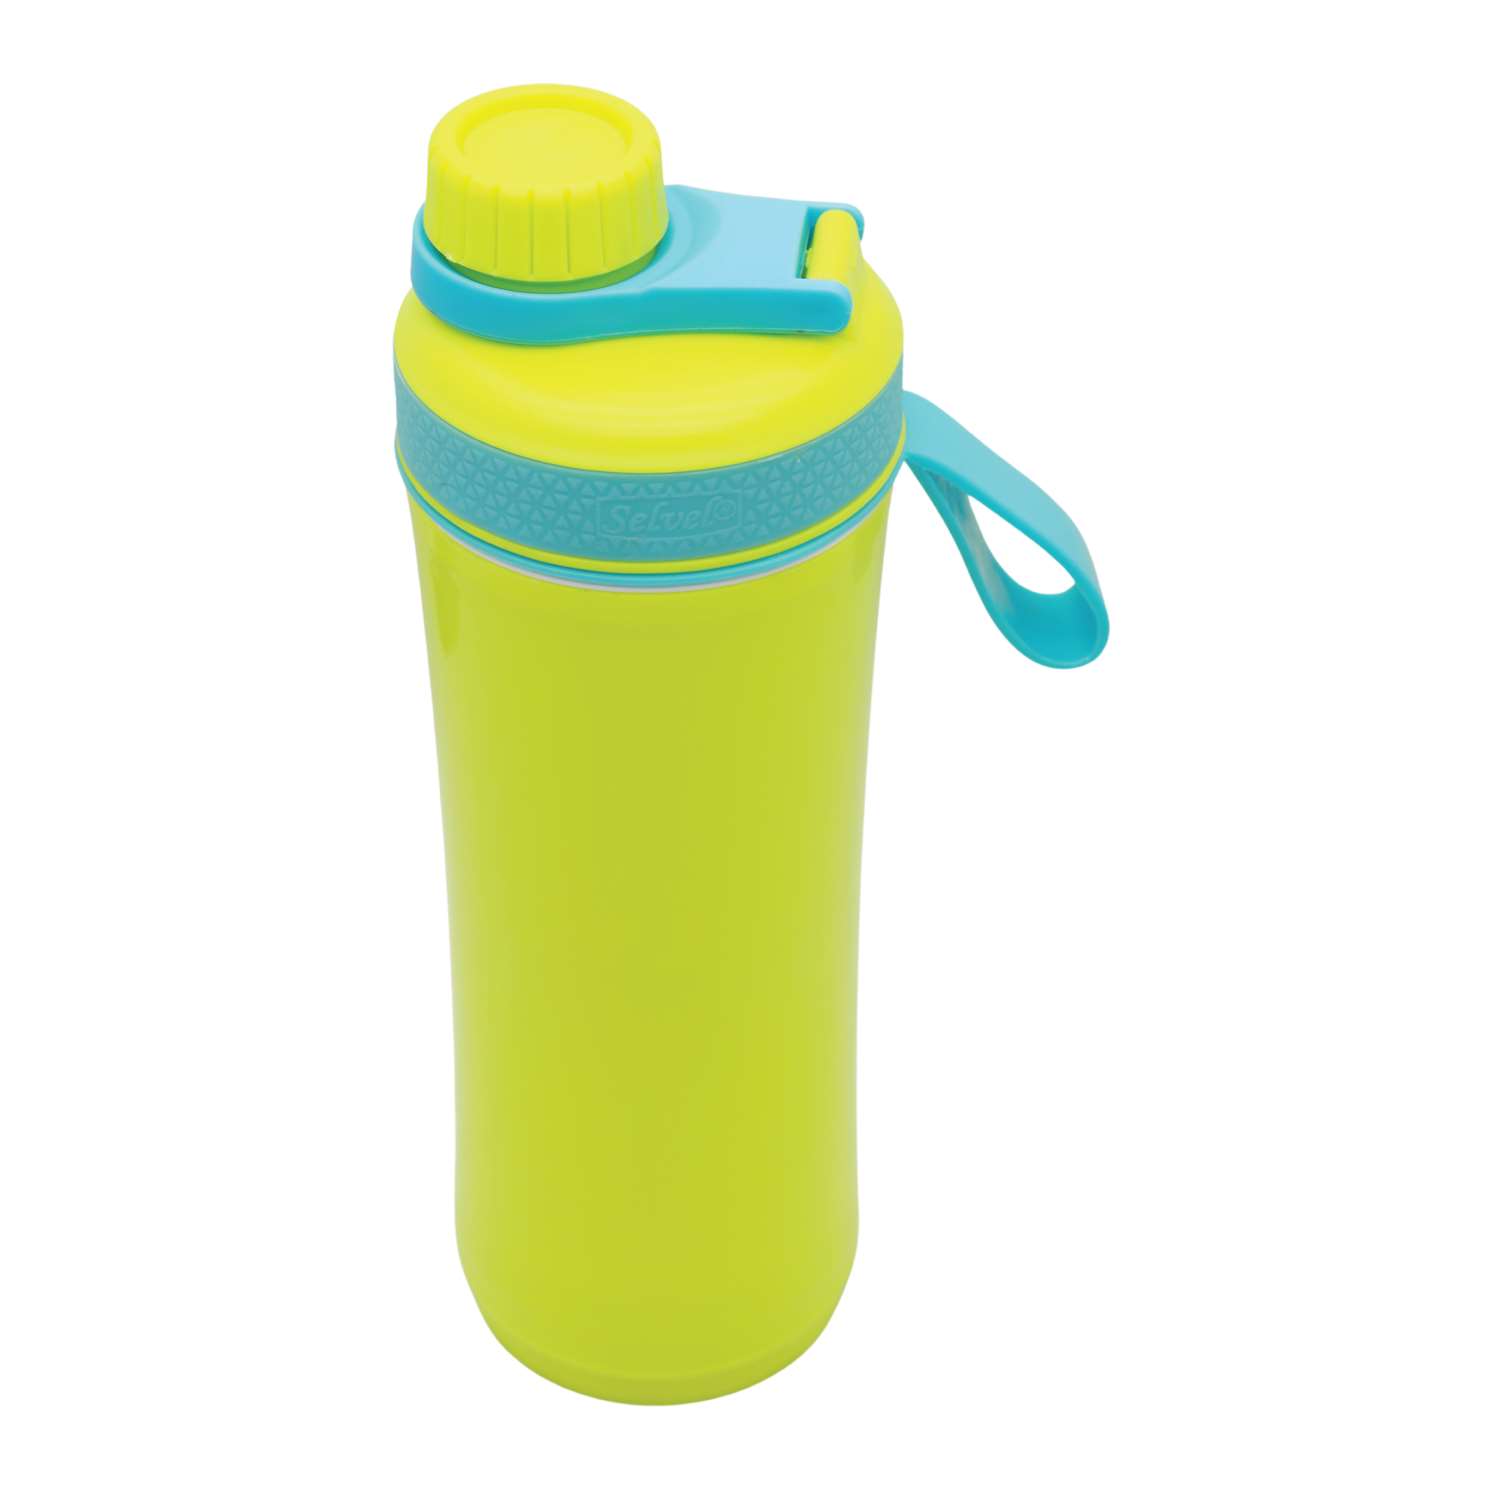 Selvel Cooltech Plastic Water Bottle Green 900Ml